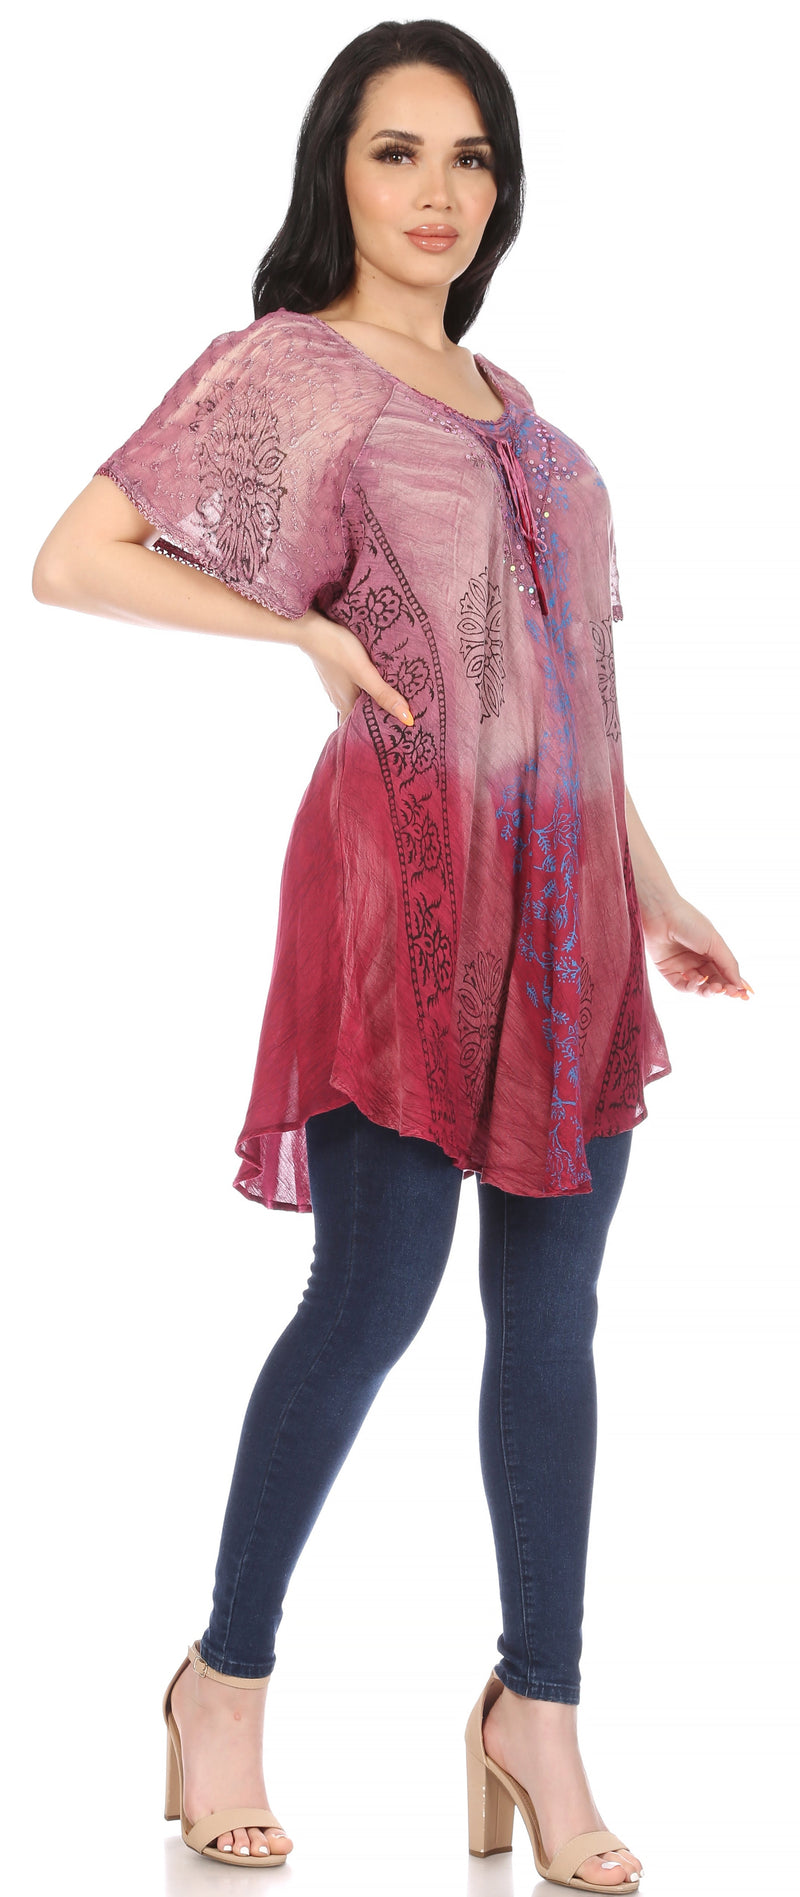 Sakkas Marzia Women's Loose Fit Short Sleeve Casual Tie Dye Batik Blouse Top Tunic